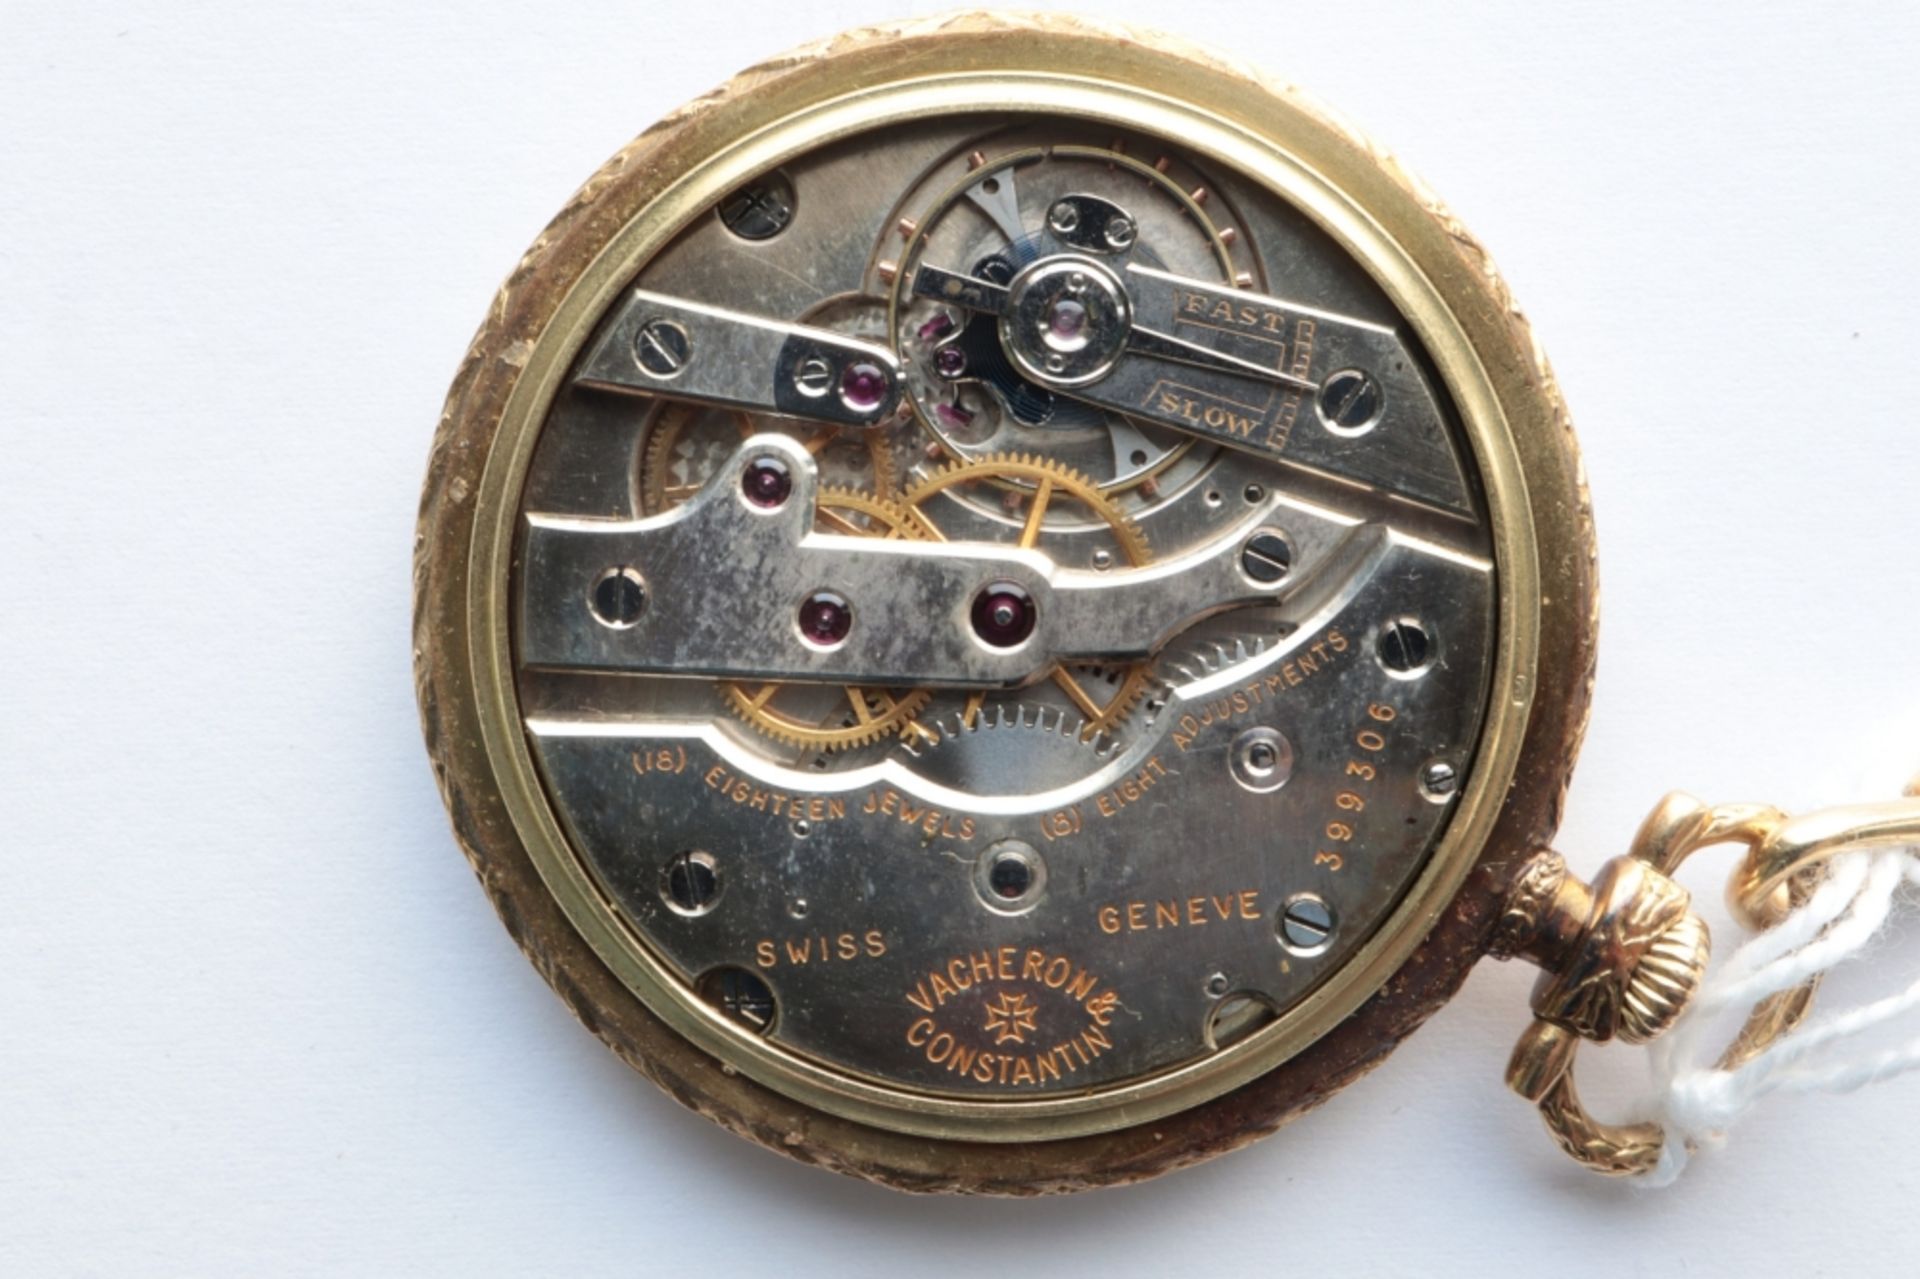 Vacheron Constantin Vacheron Constantin chronometer pocket watch and chain SWITZERLAND 18k gold - Image 3 of 3